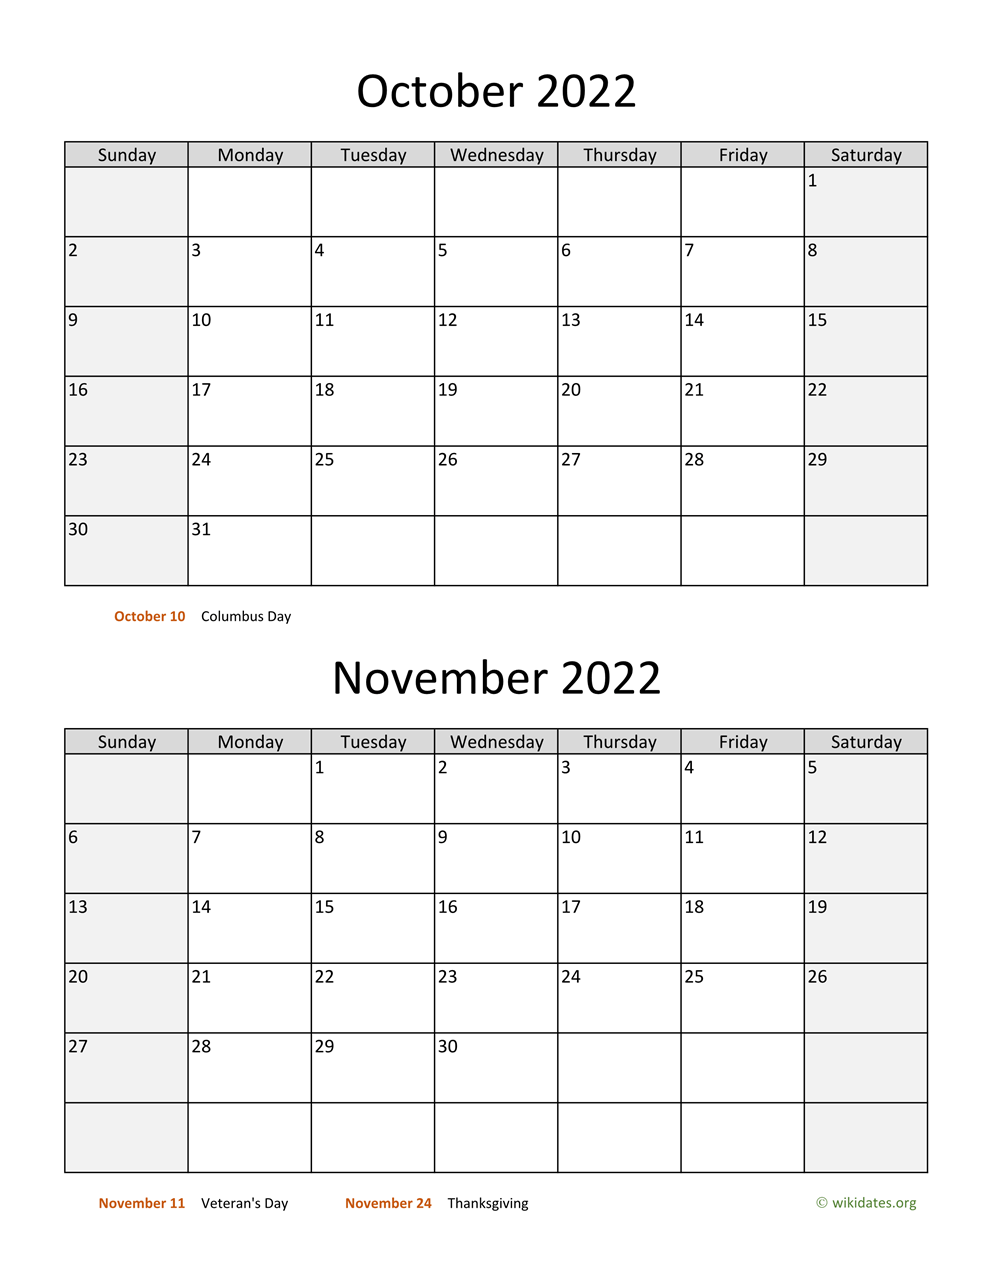 October And November 2022 Calendar Printable October And November 2022 Calendar | Wikidates.org